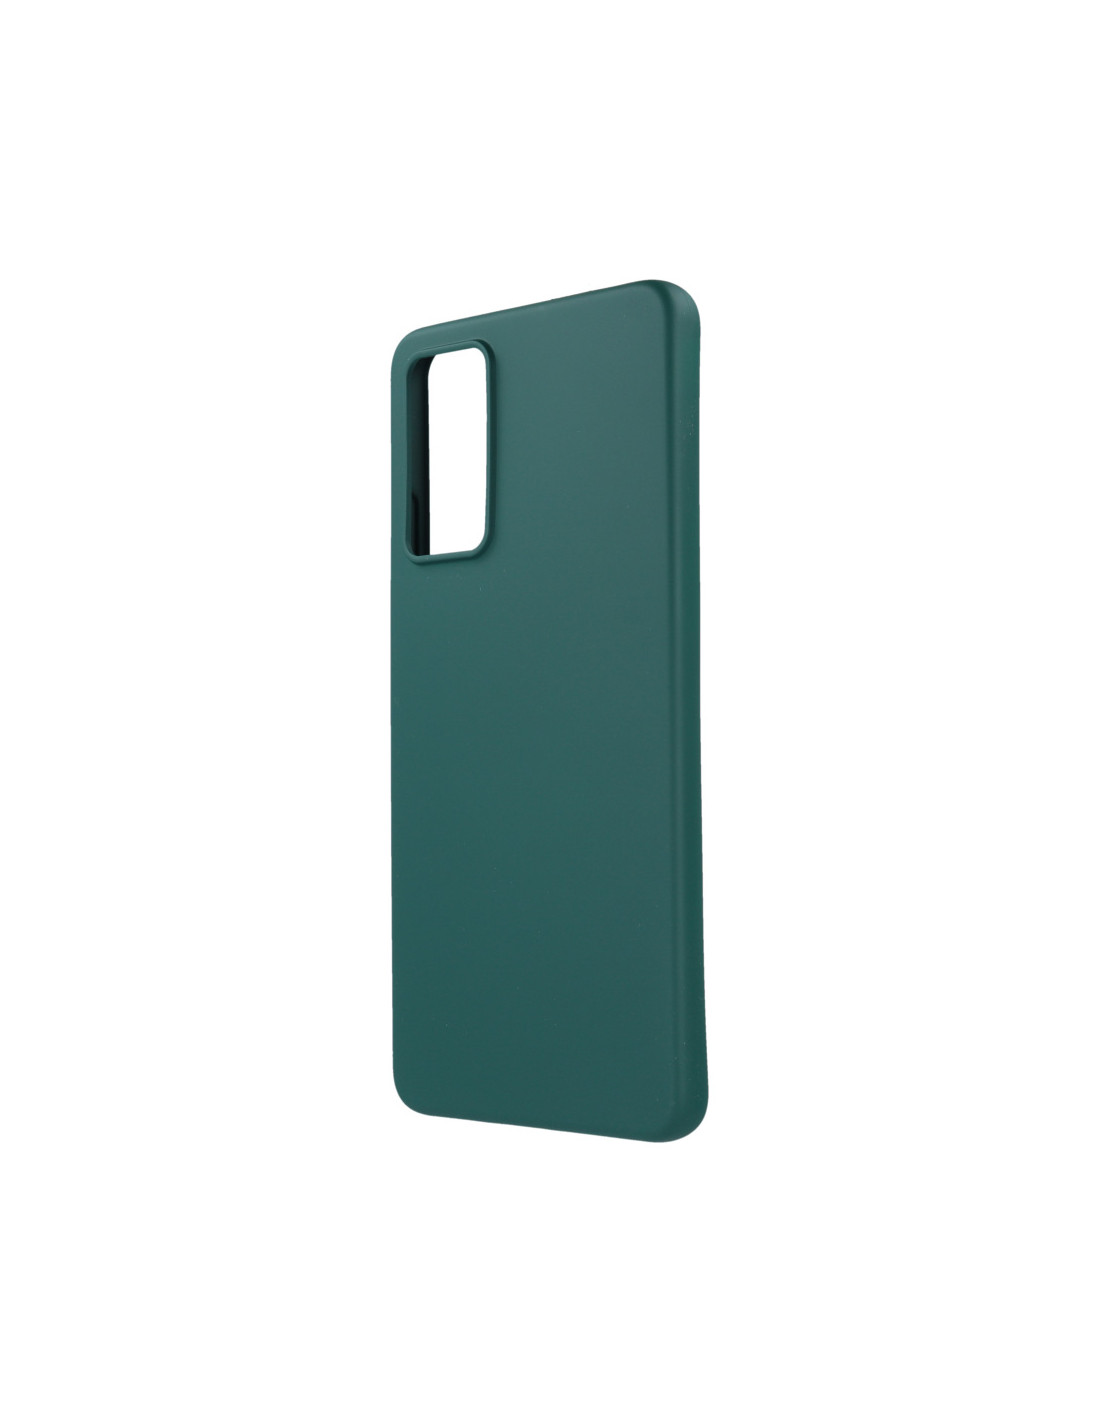 Funda Silicona Líquida Ultra Suave para Xiaomi Redmi Note 10 Pro color Verde